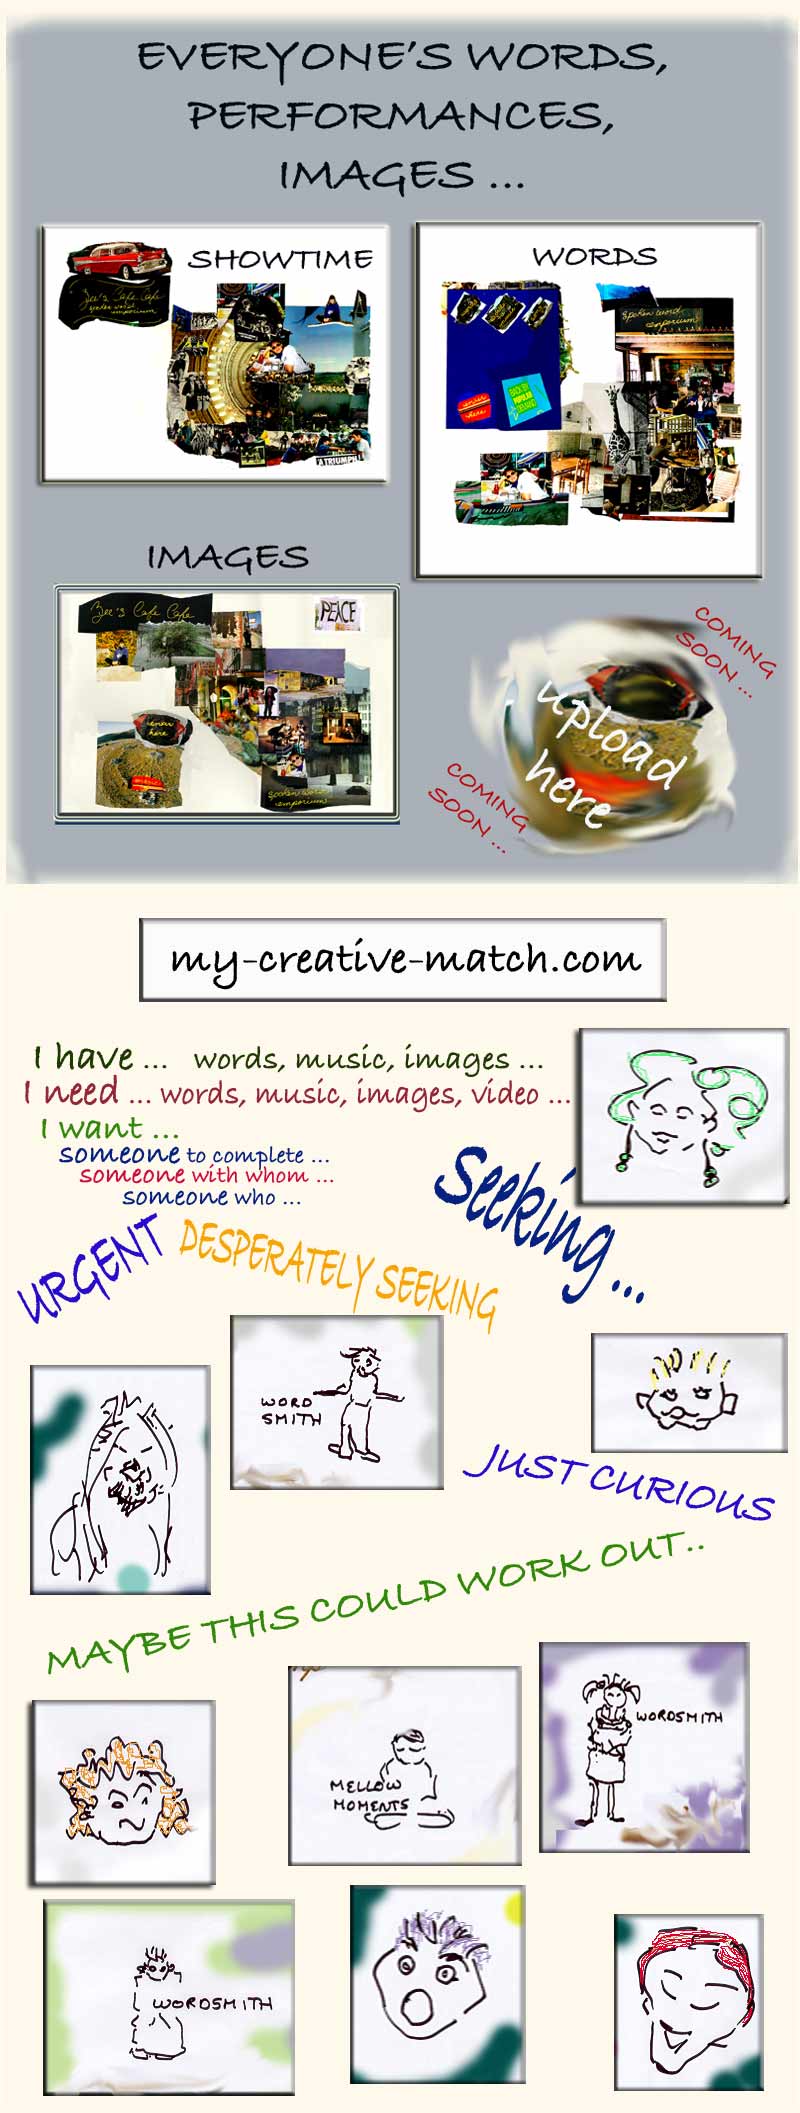 large pictures - elsas word story image idea music emporium - your words, images, music